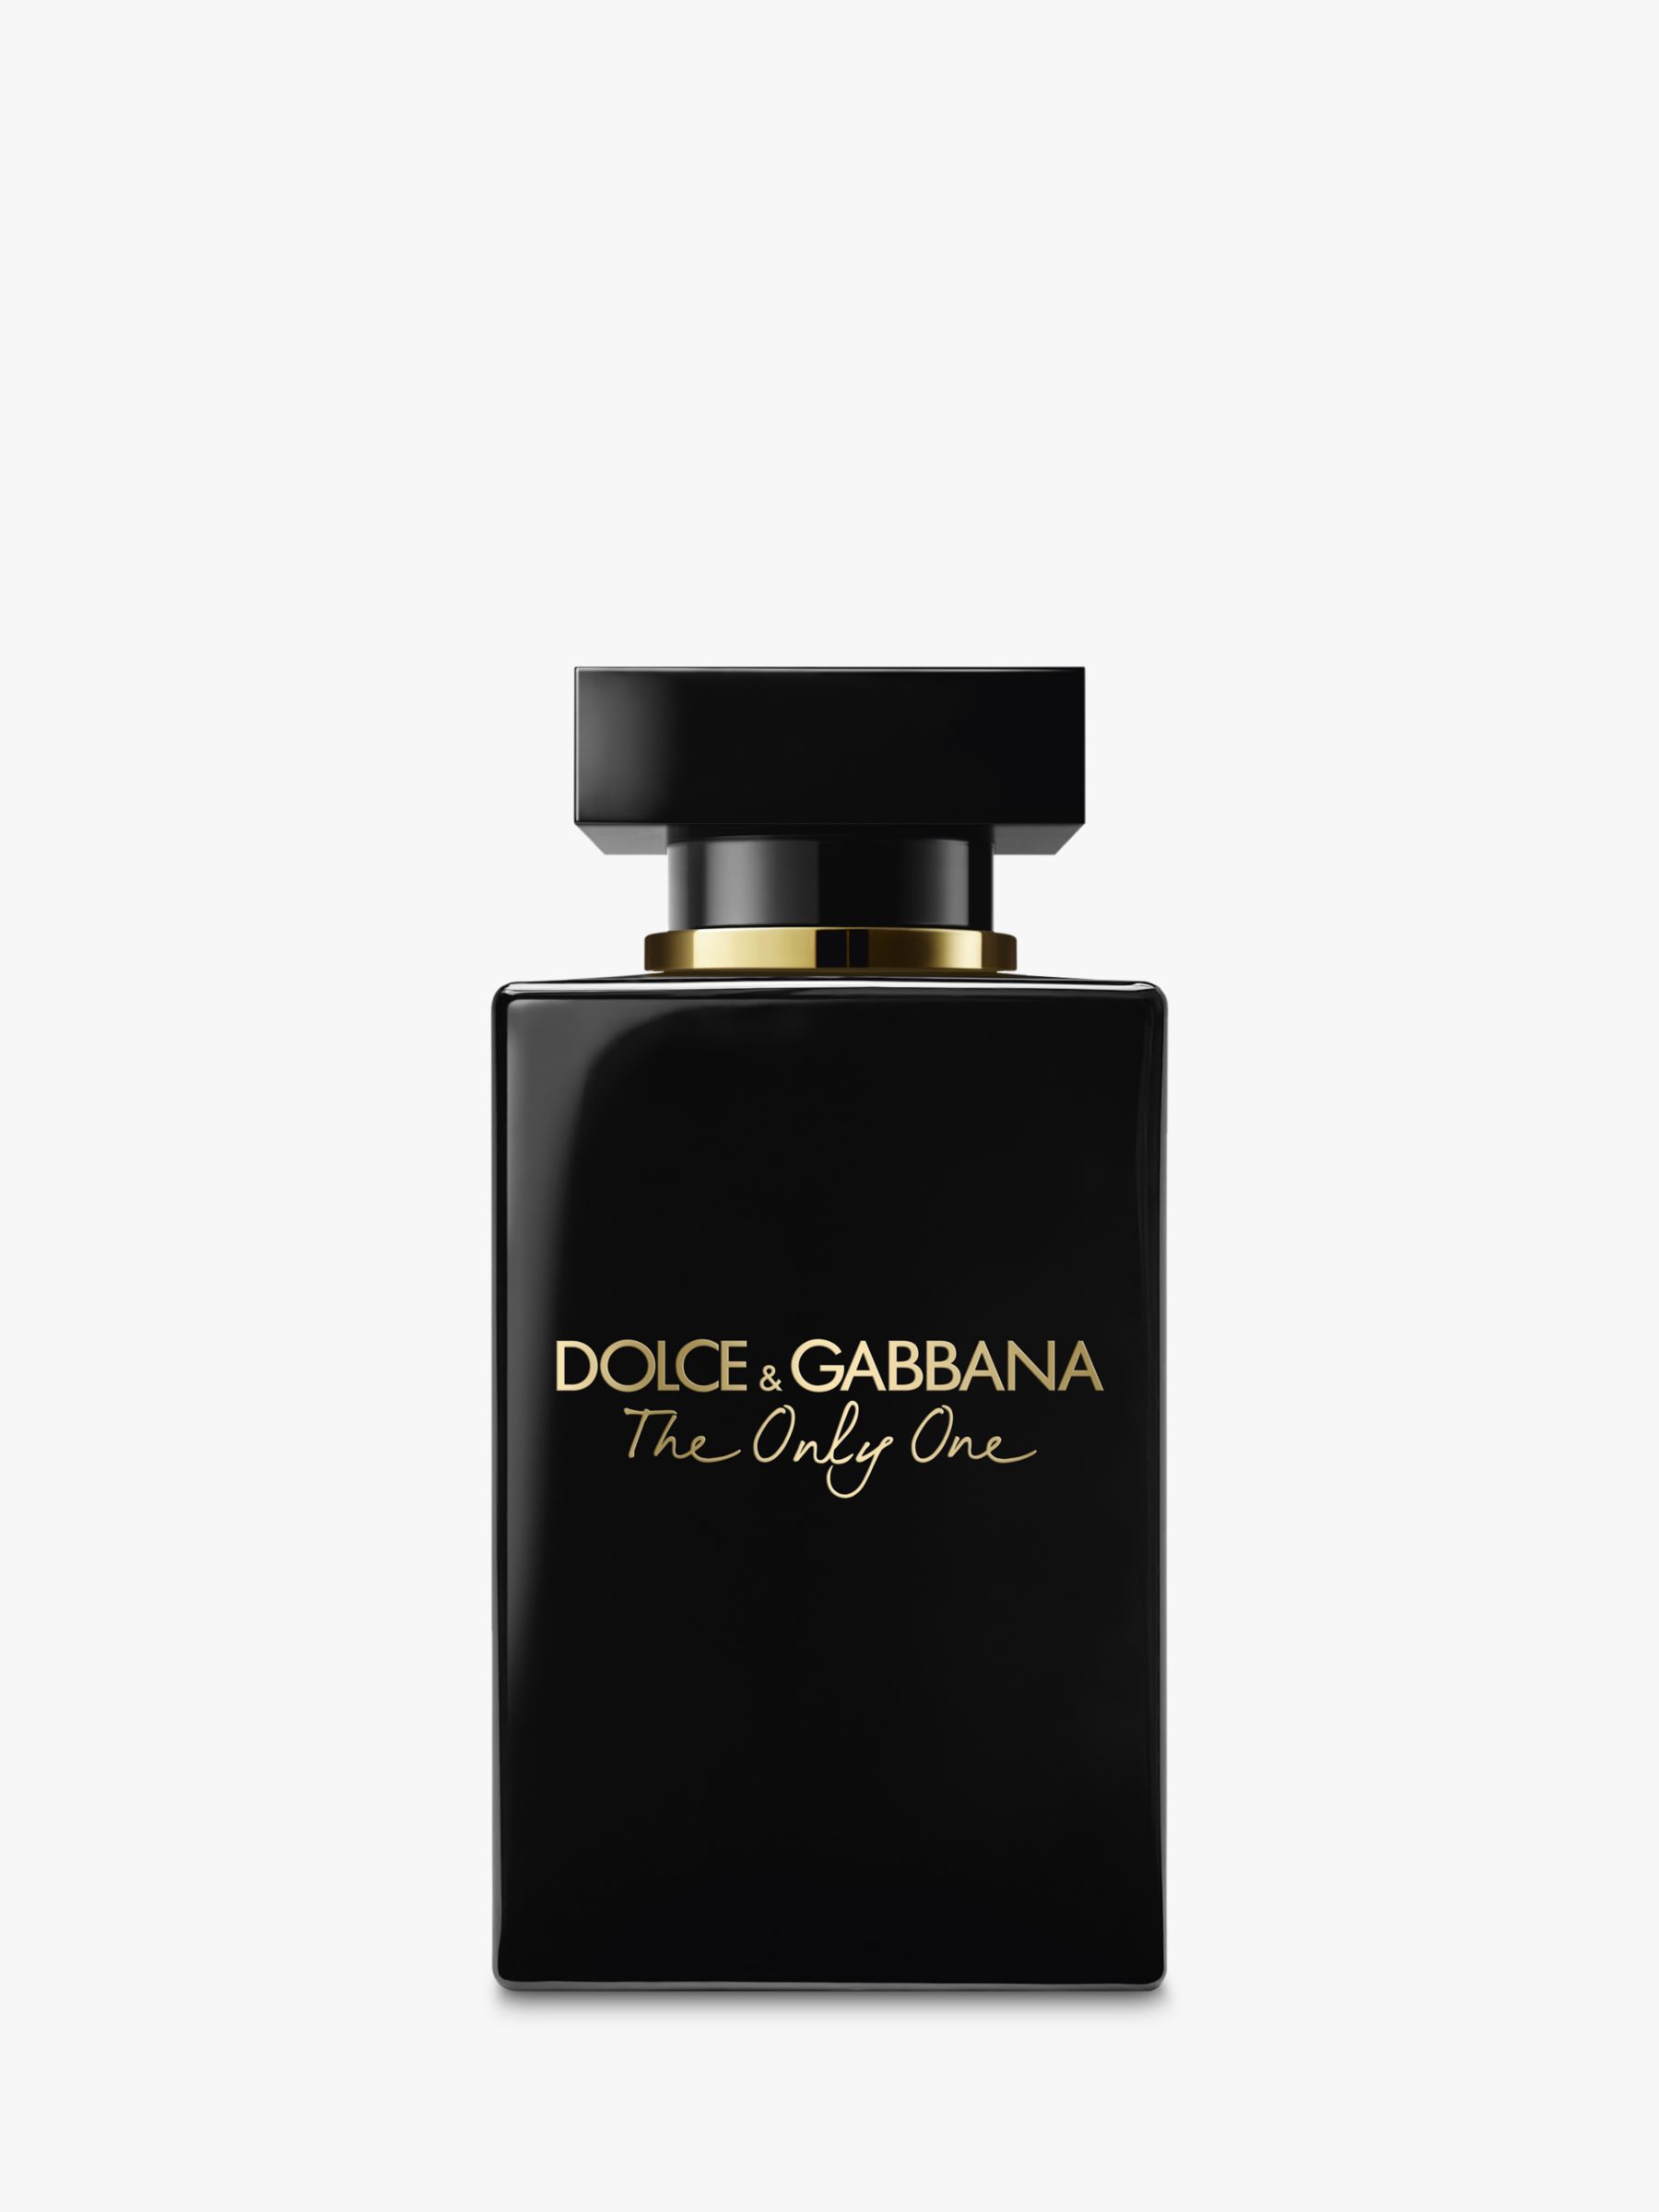 Dolce And Gabbana The Only One Eau De Parfum Intense 30ml At John Lewis